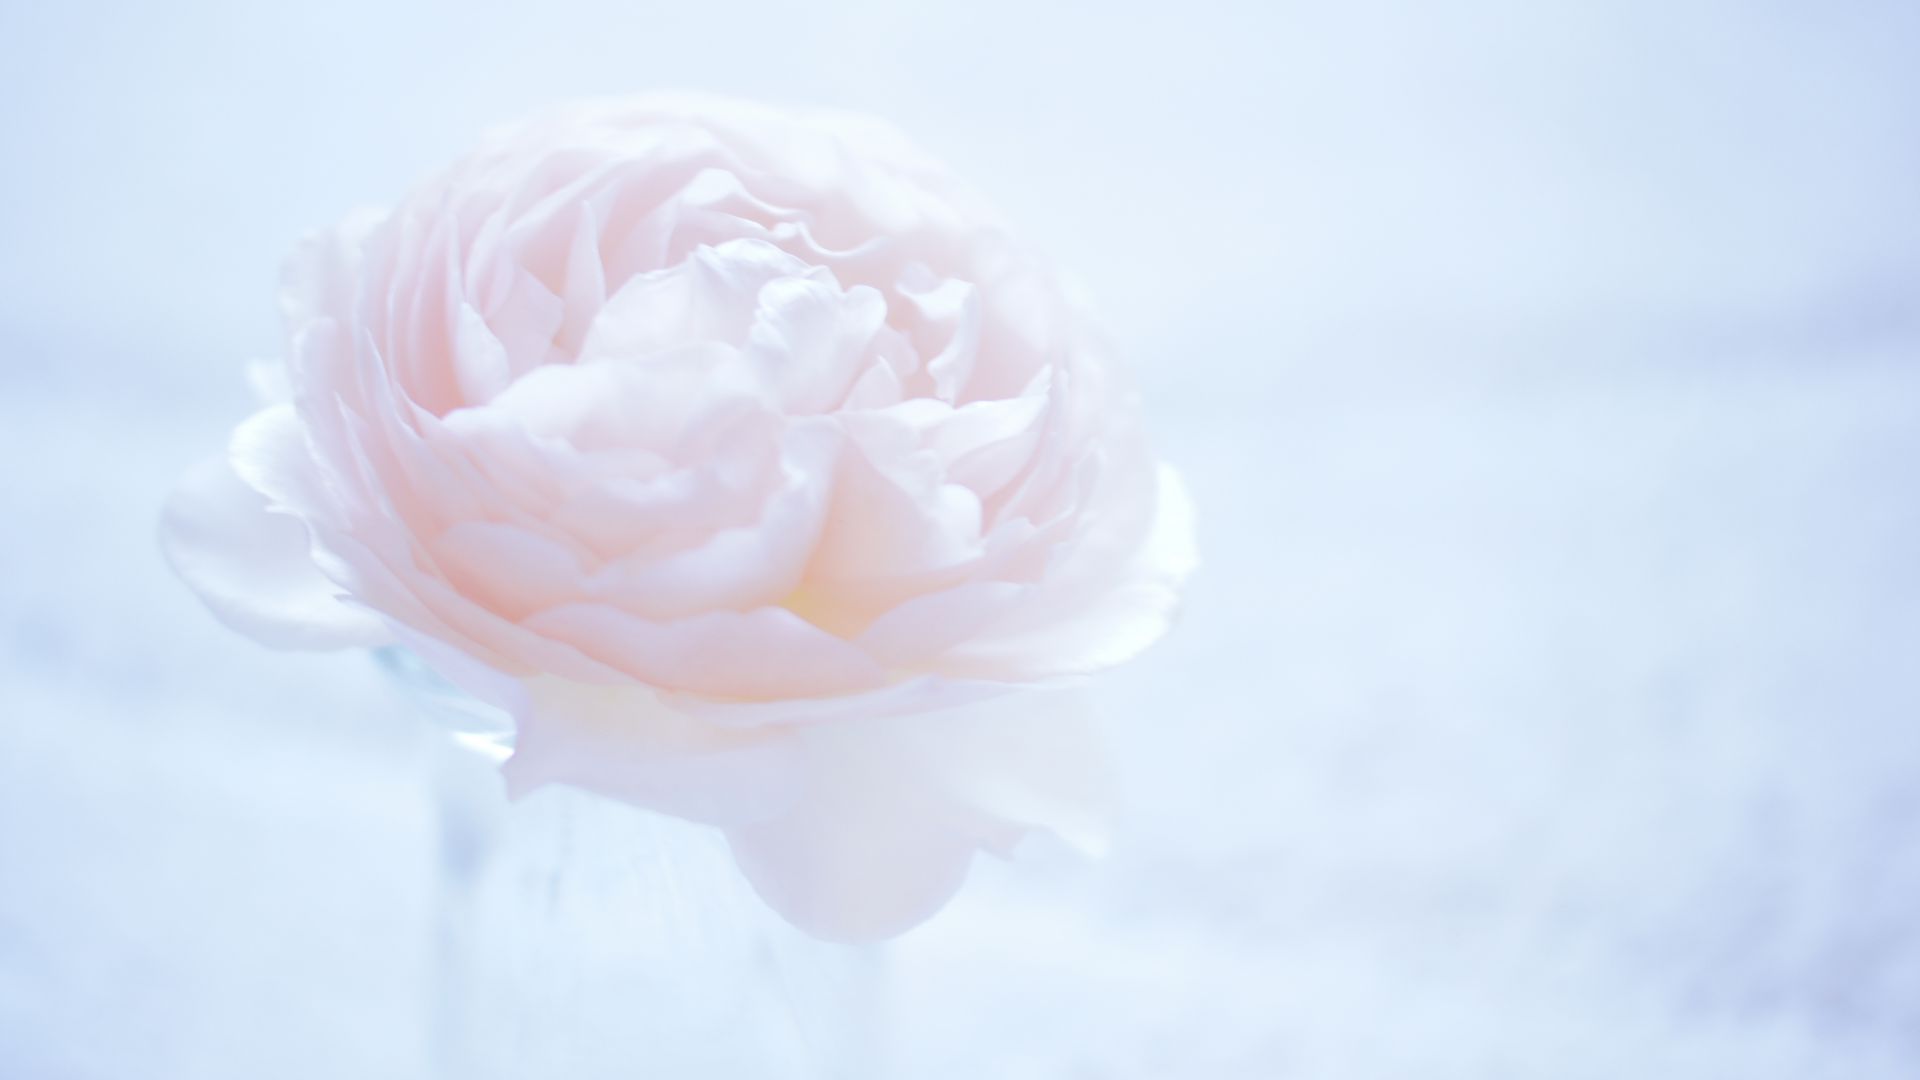 Камелия, 5k, 4k, 8k, цветок, розовый, Camellia, 5k, 4k wallpaper, 8k, flower, pink (horizontal)